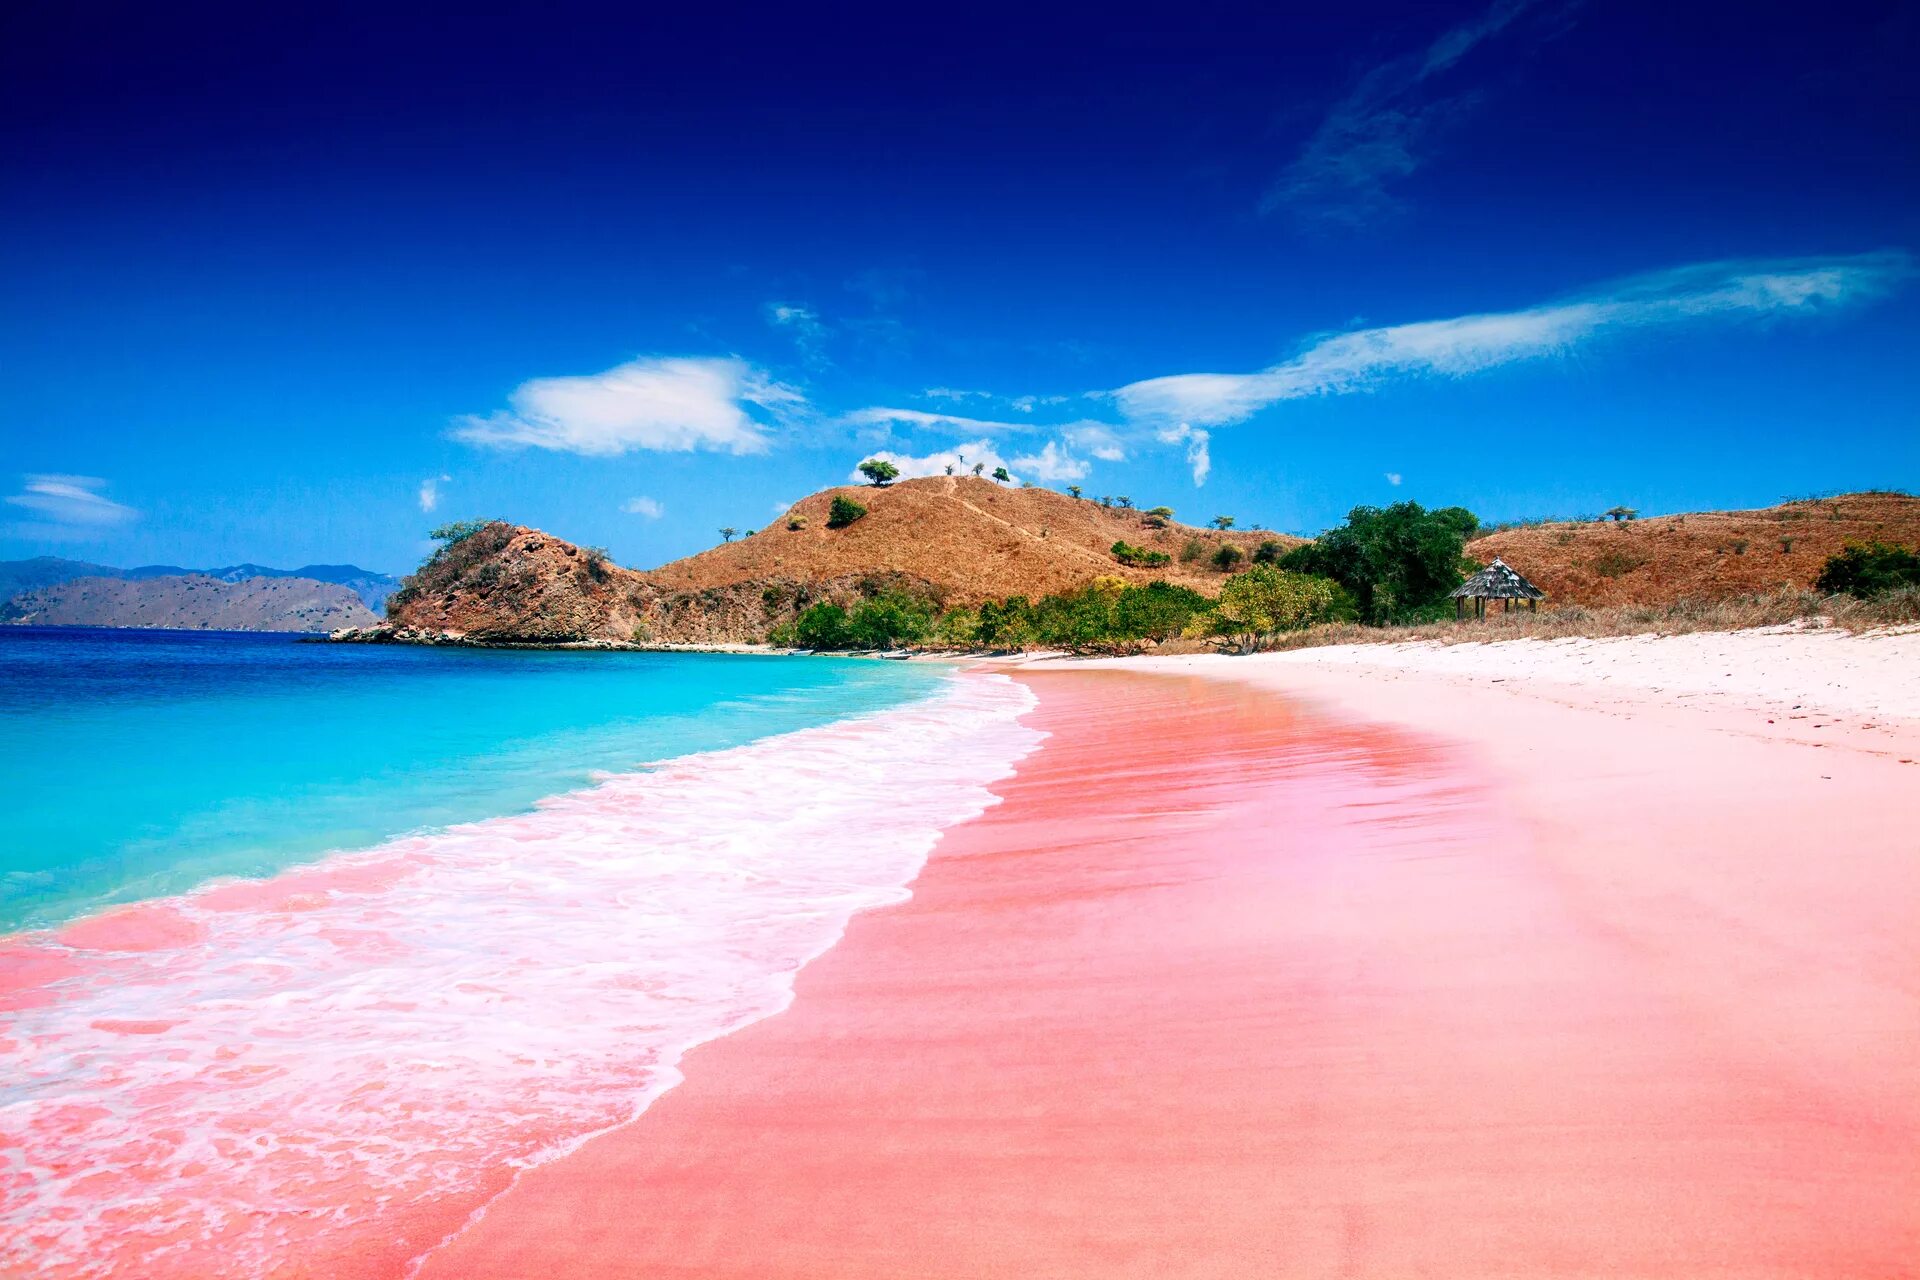 Розовый пляж на острове Комодо Индонезия. Остров Харбор Багамские острова. Пляж Пинк Сэндс Бич Багамские острова. Розовый пляж Пинк Сэнд Бич, Багамские острова.